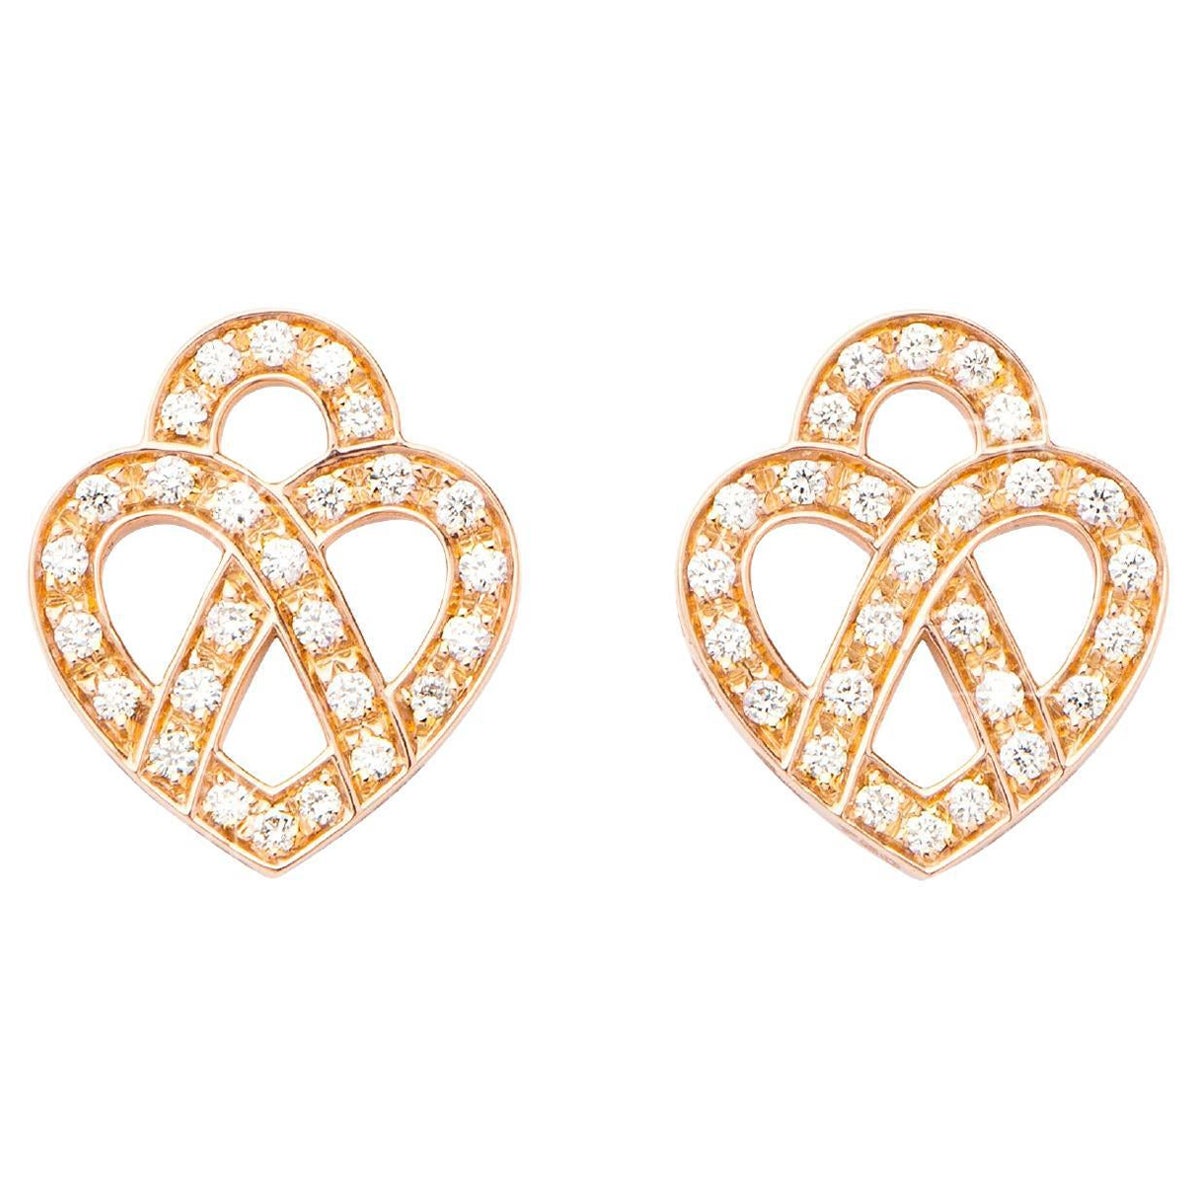 18 Carat Gold and Diamonds Earrings, Rose Gold, Cœur Entrelacé Collection For Sale